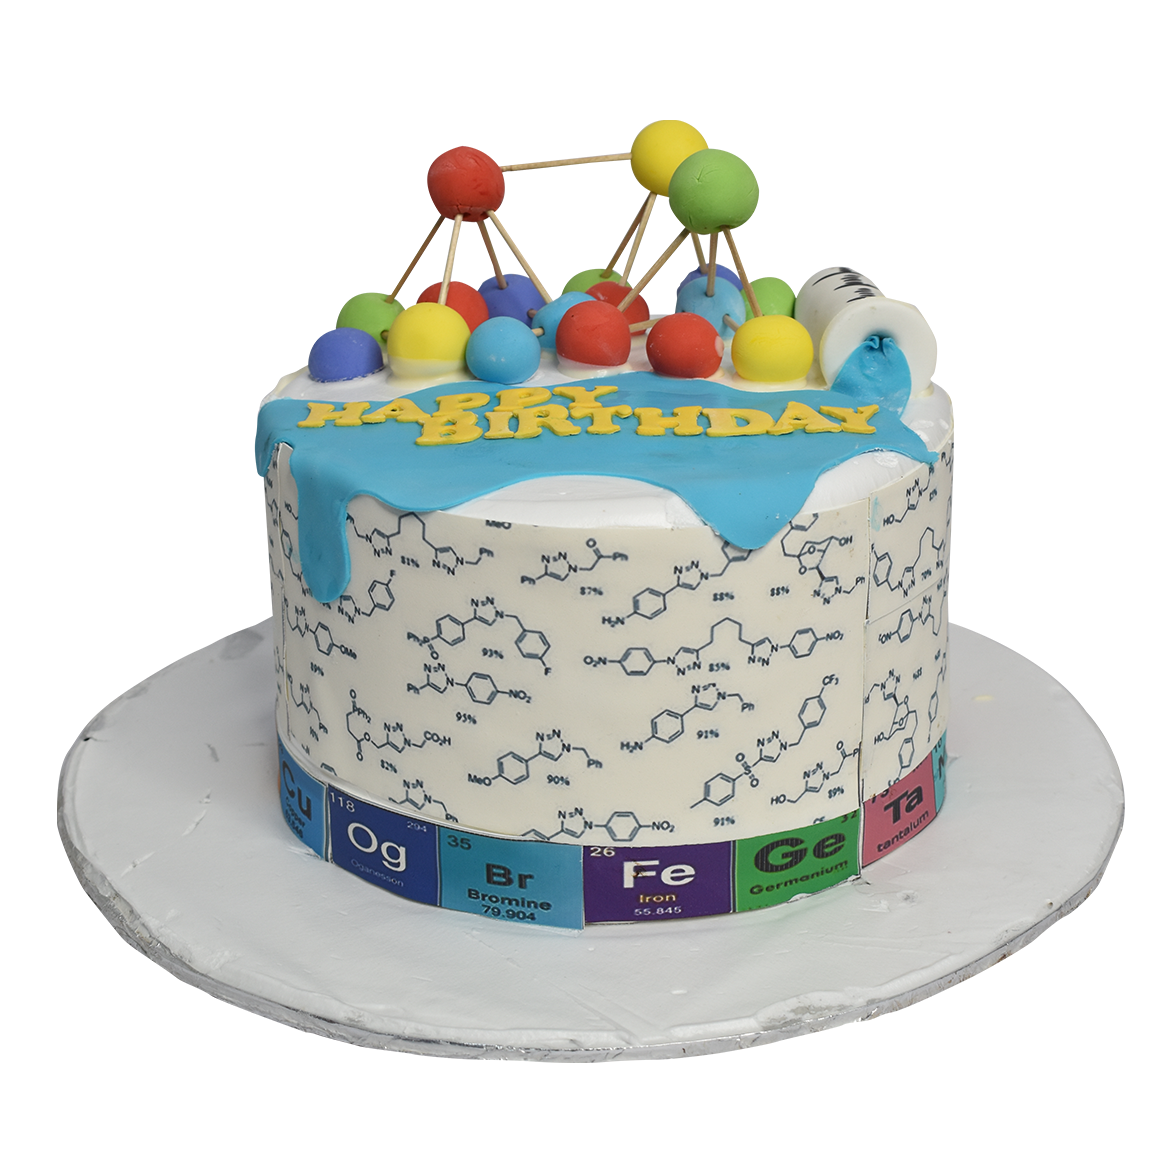 chemistry behind cake｜TikTok Search